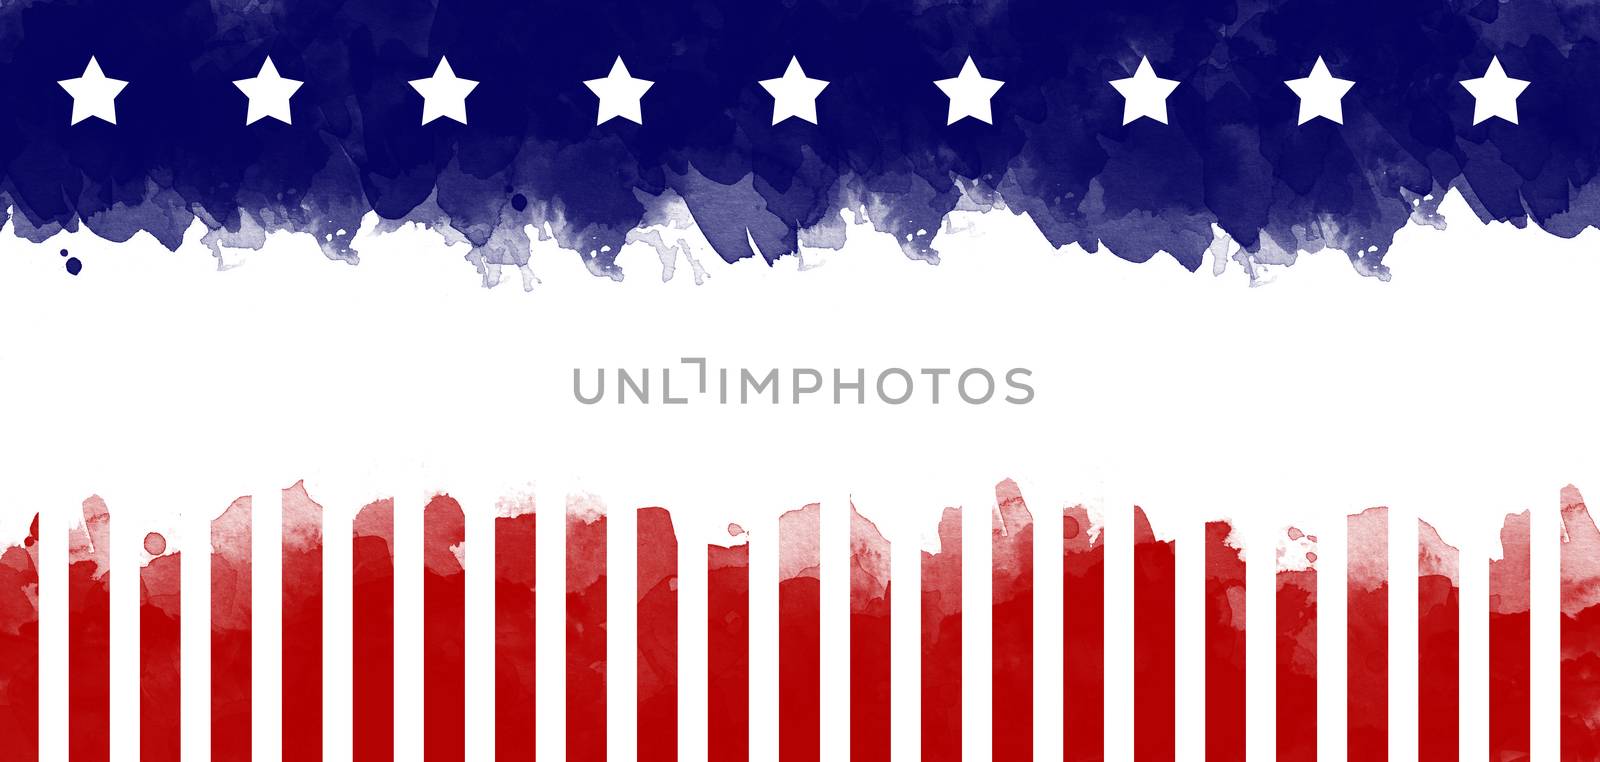 American flag grunge greeting card background